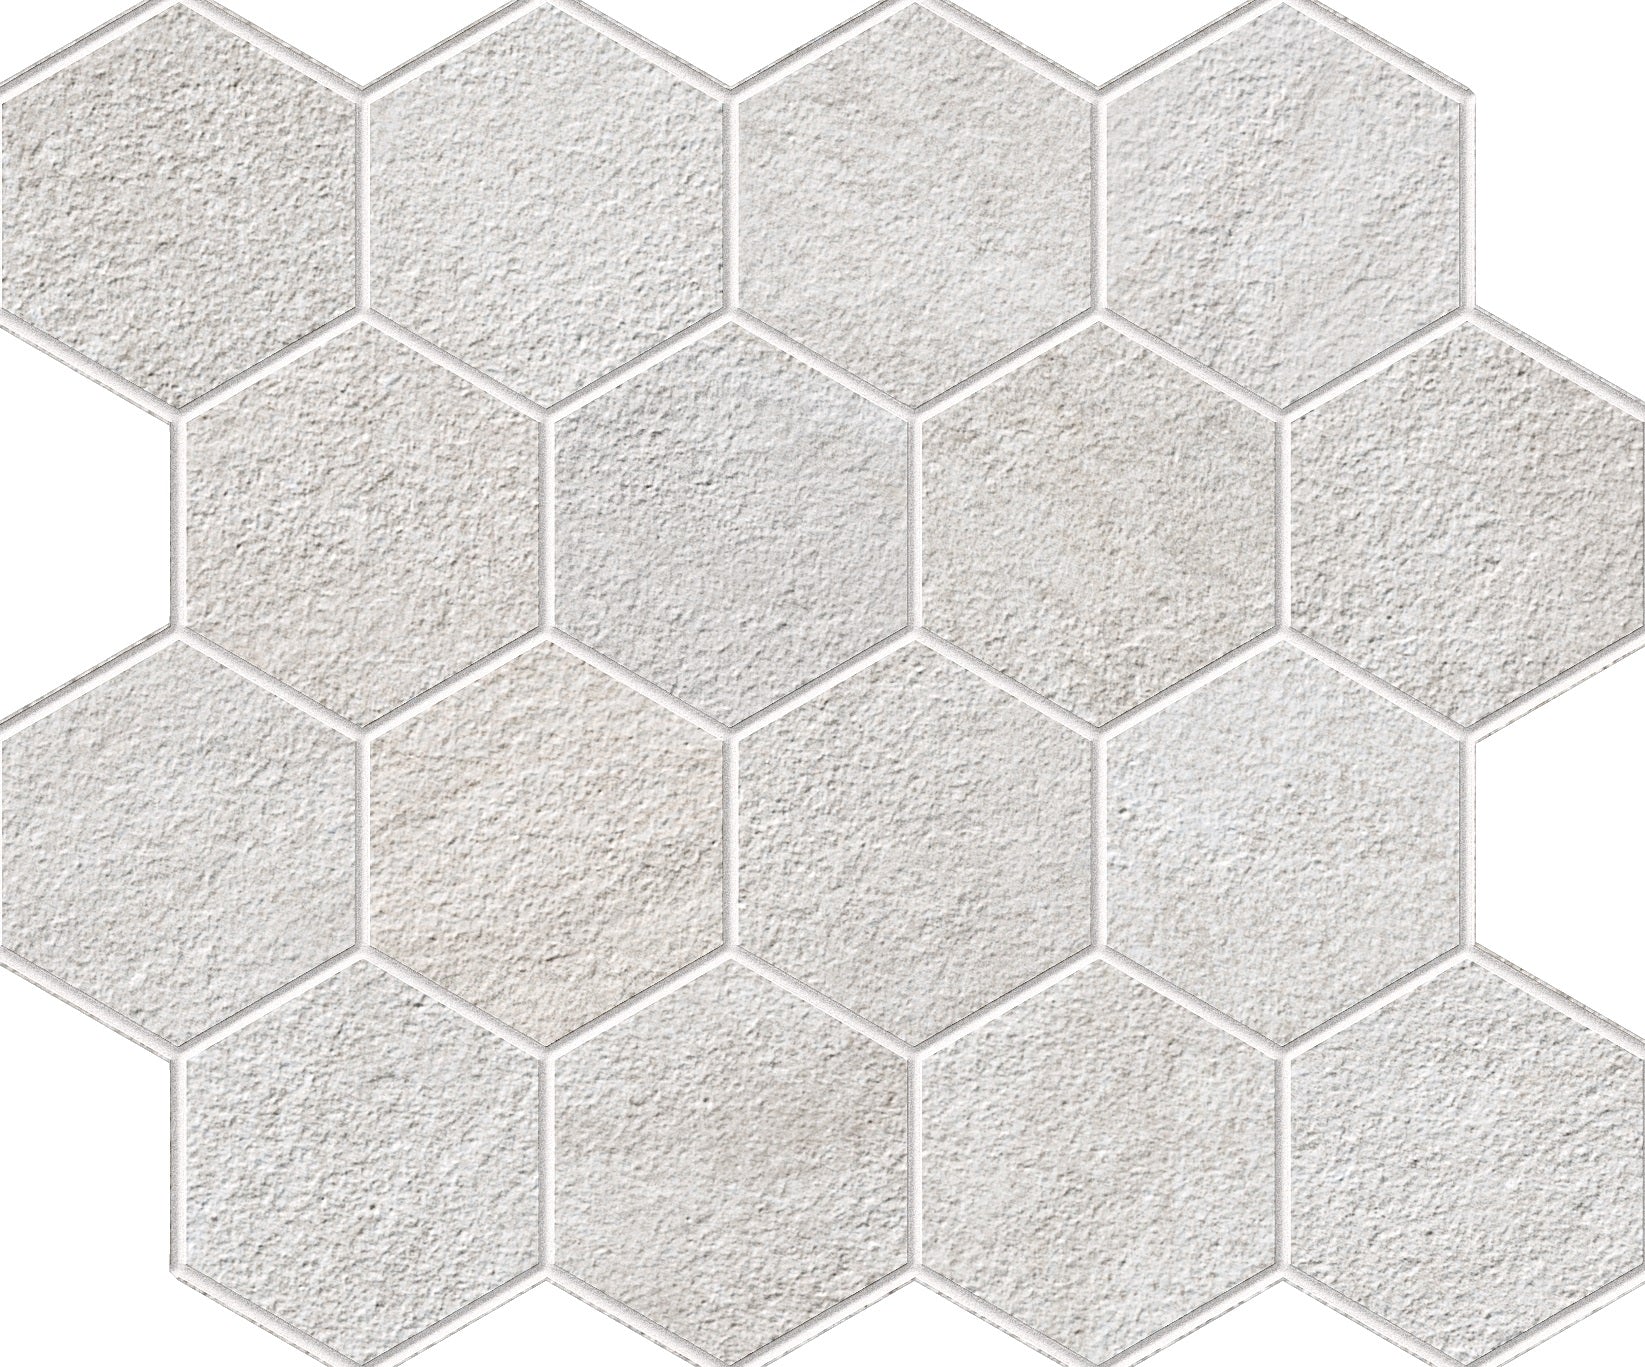 surface group international landmark explore stone star grey matte mosaic d hexagon medium hexagon 12x10x9 mm for outdoor application manufactured by landmark